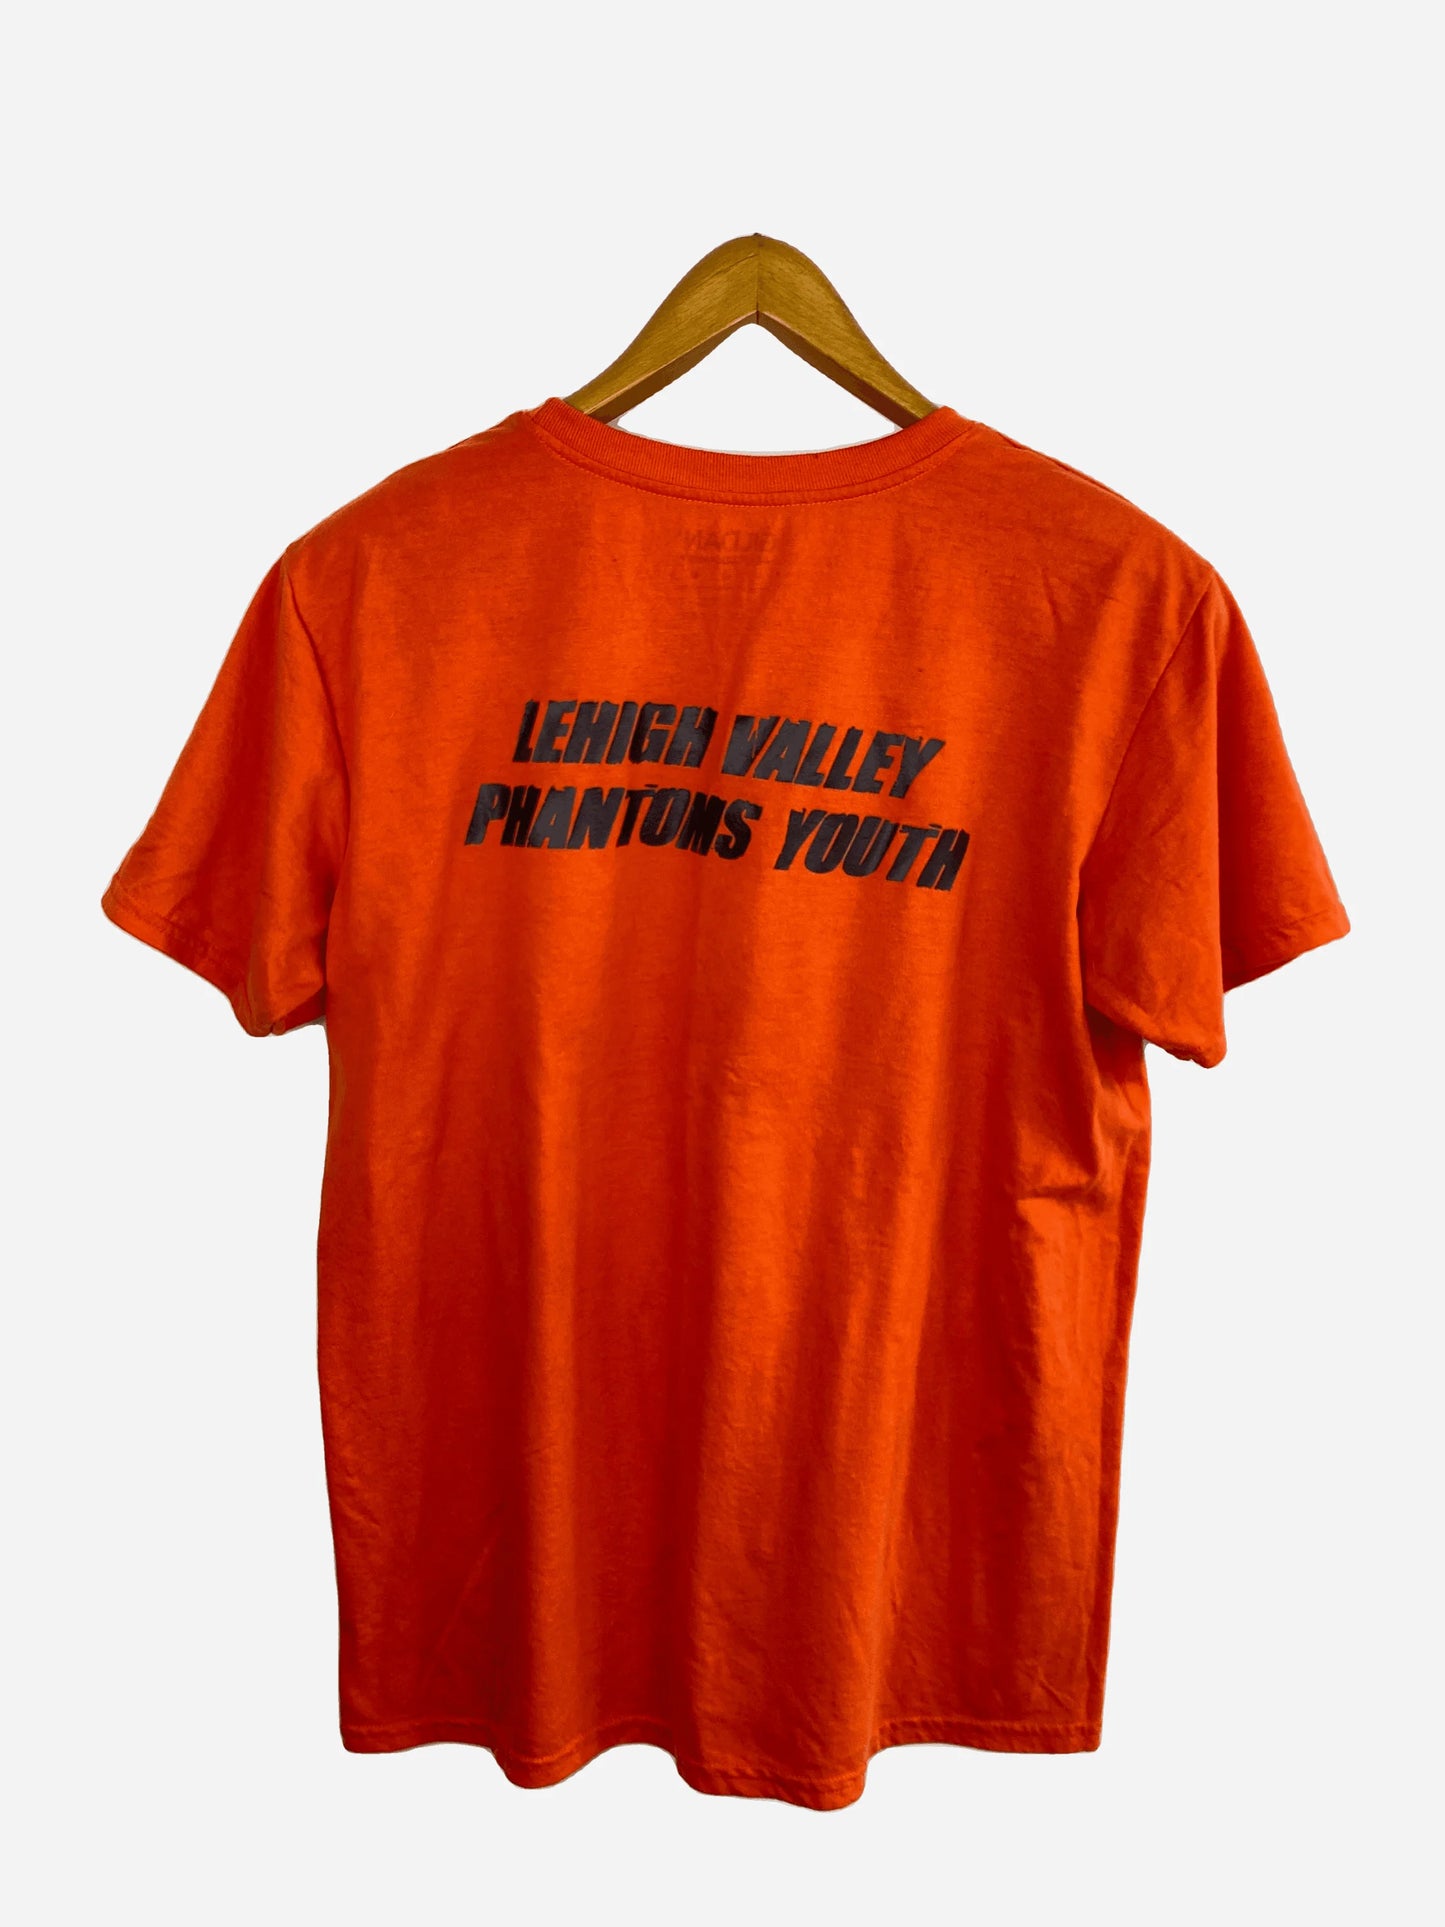 Lehigh Valley T-Shirt (M)